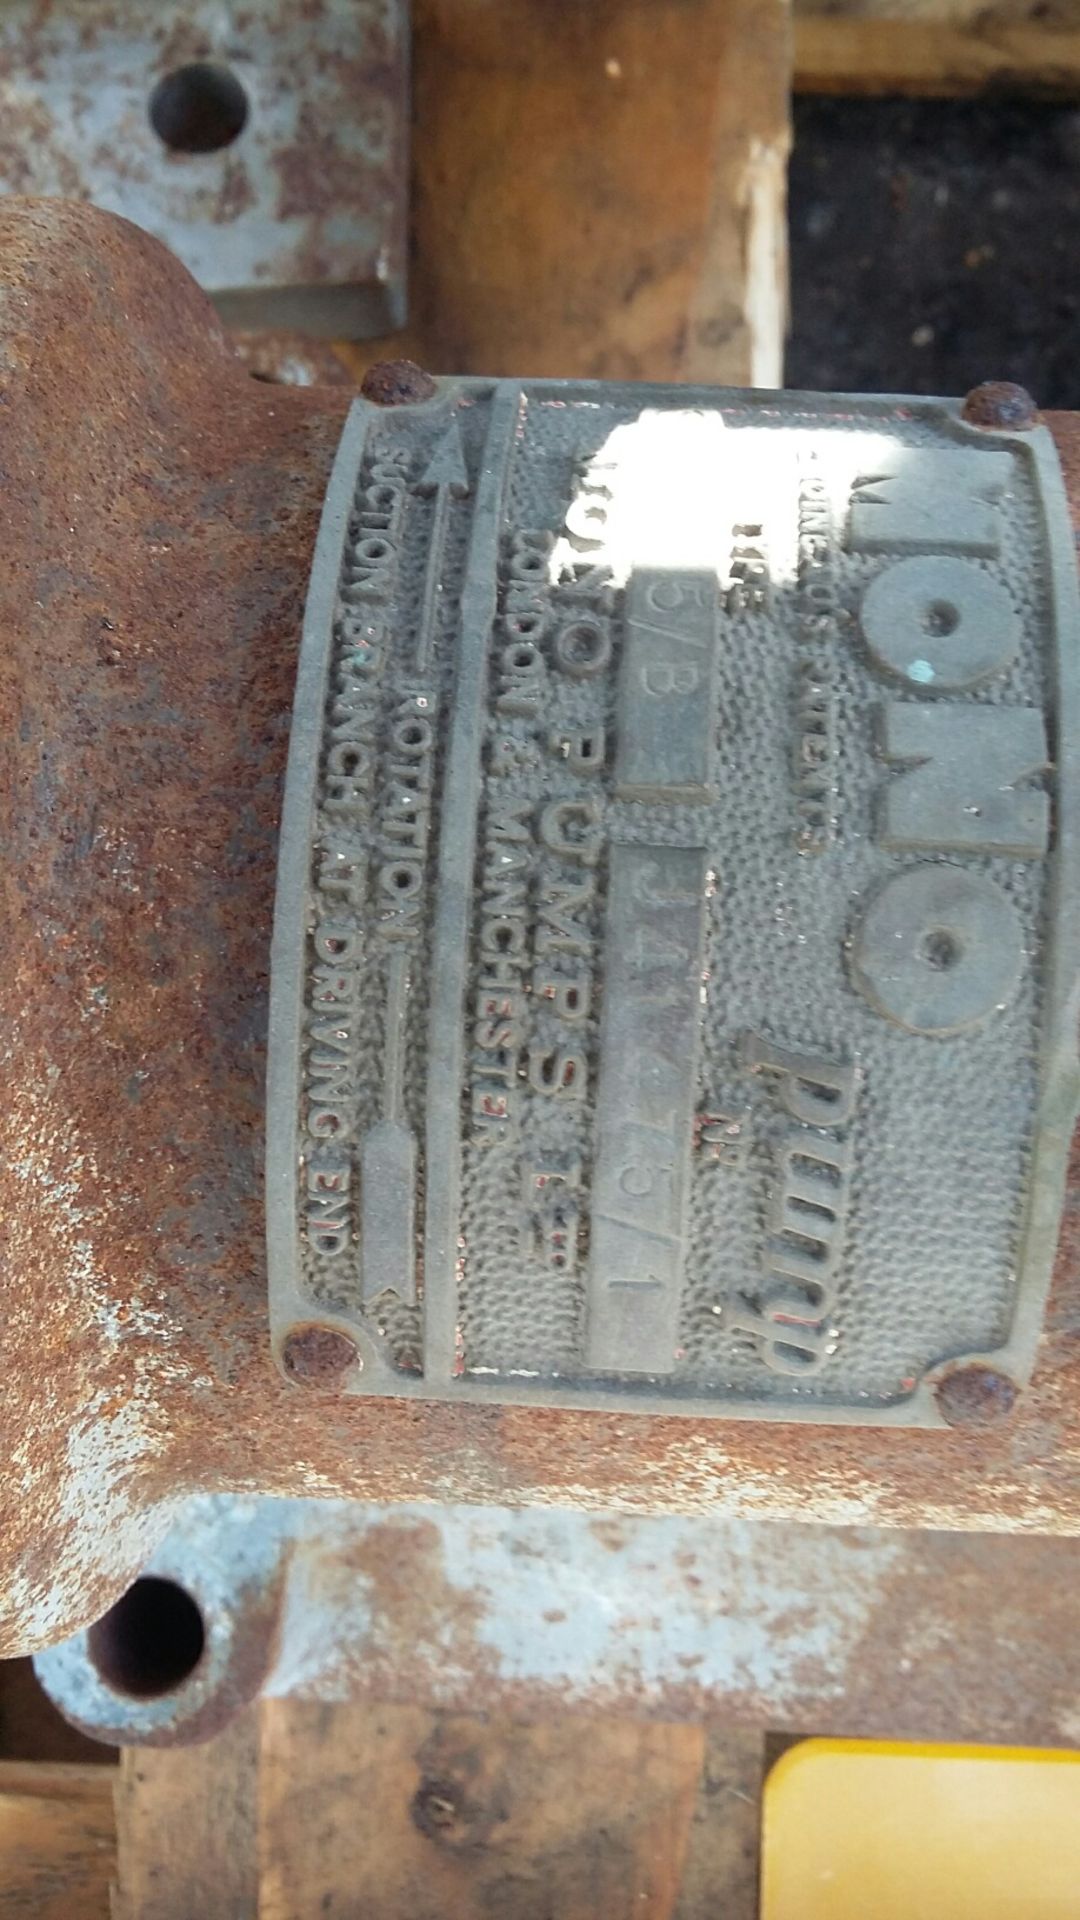 Mono SH40 Bareshaft Stainless Steel Pump - Image 2 of 3